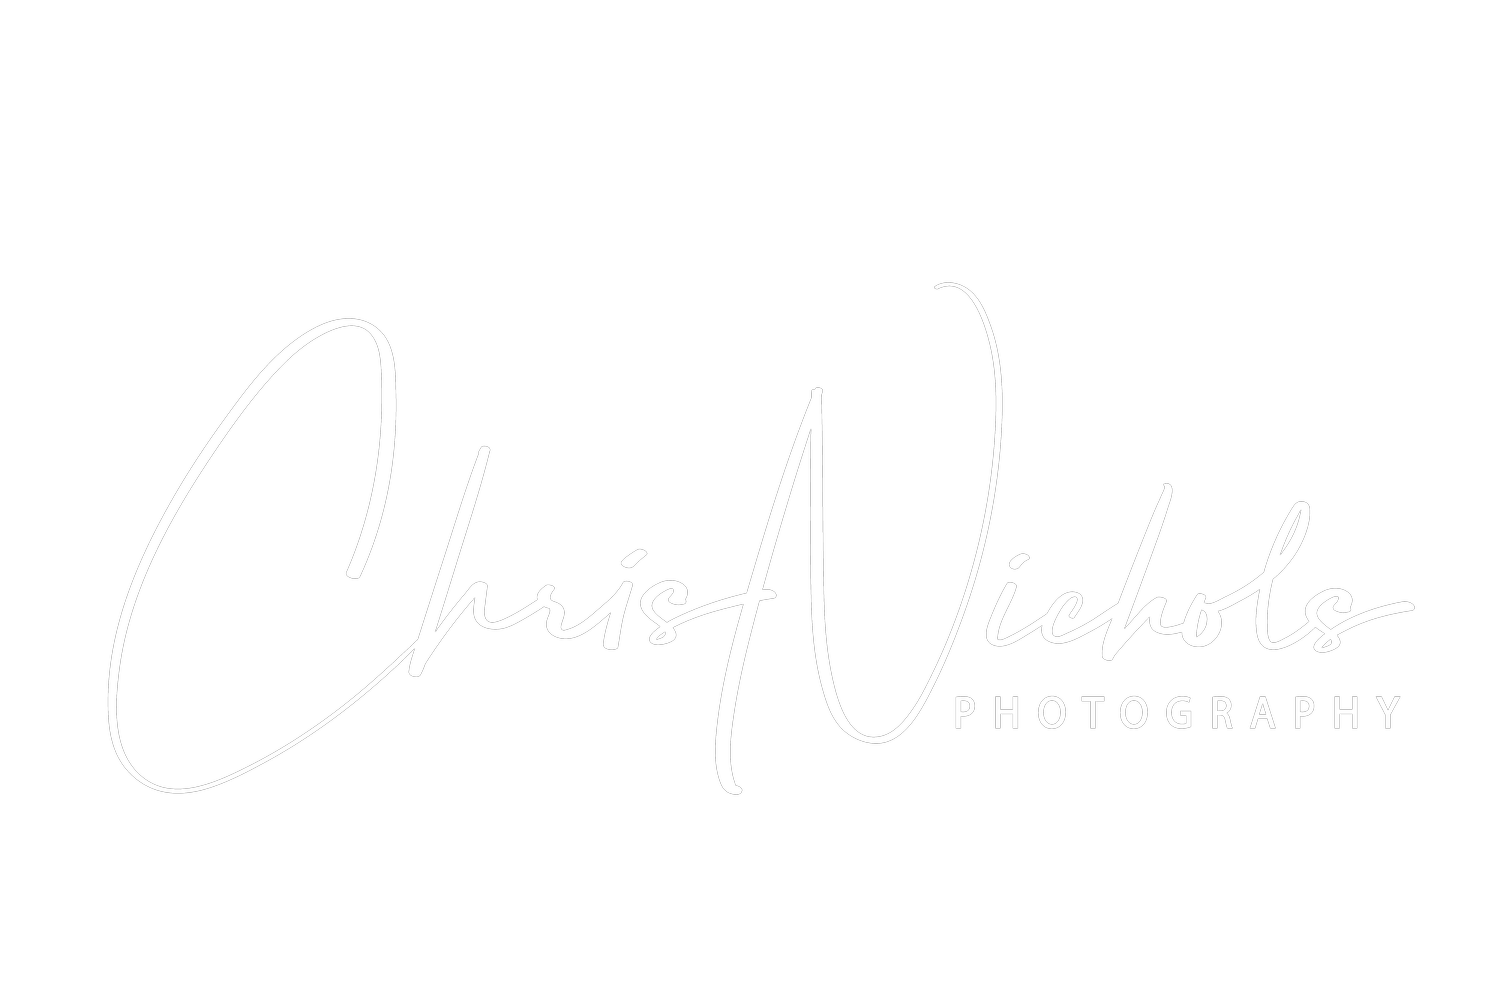 Chris Nichols Photography